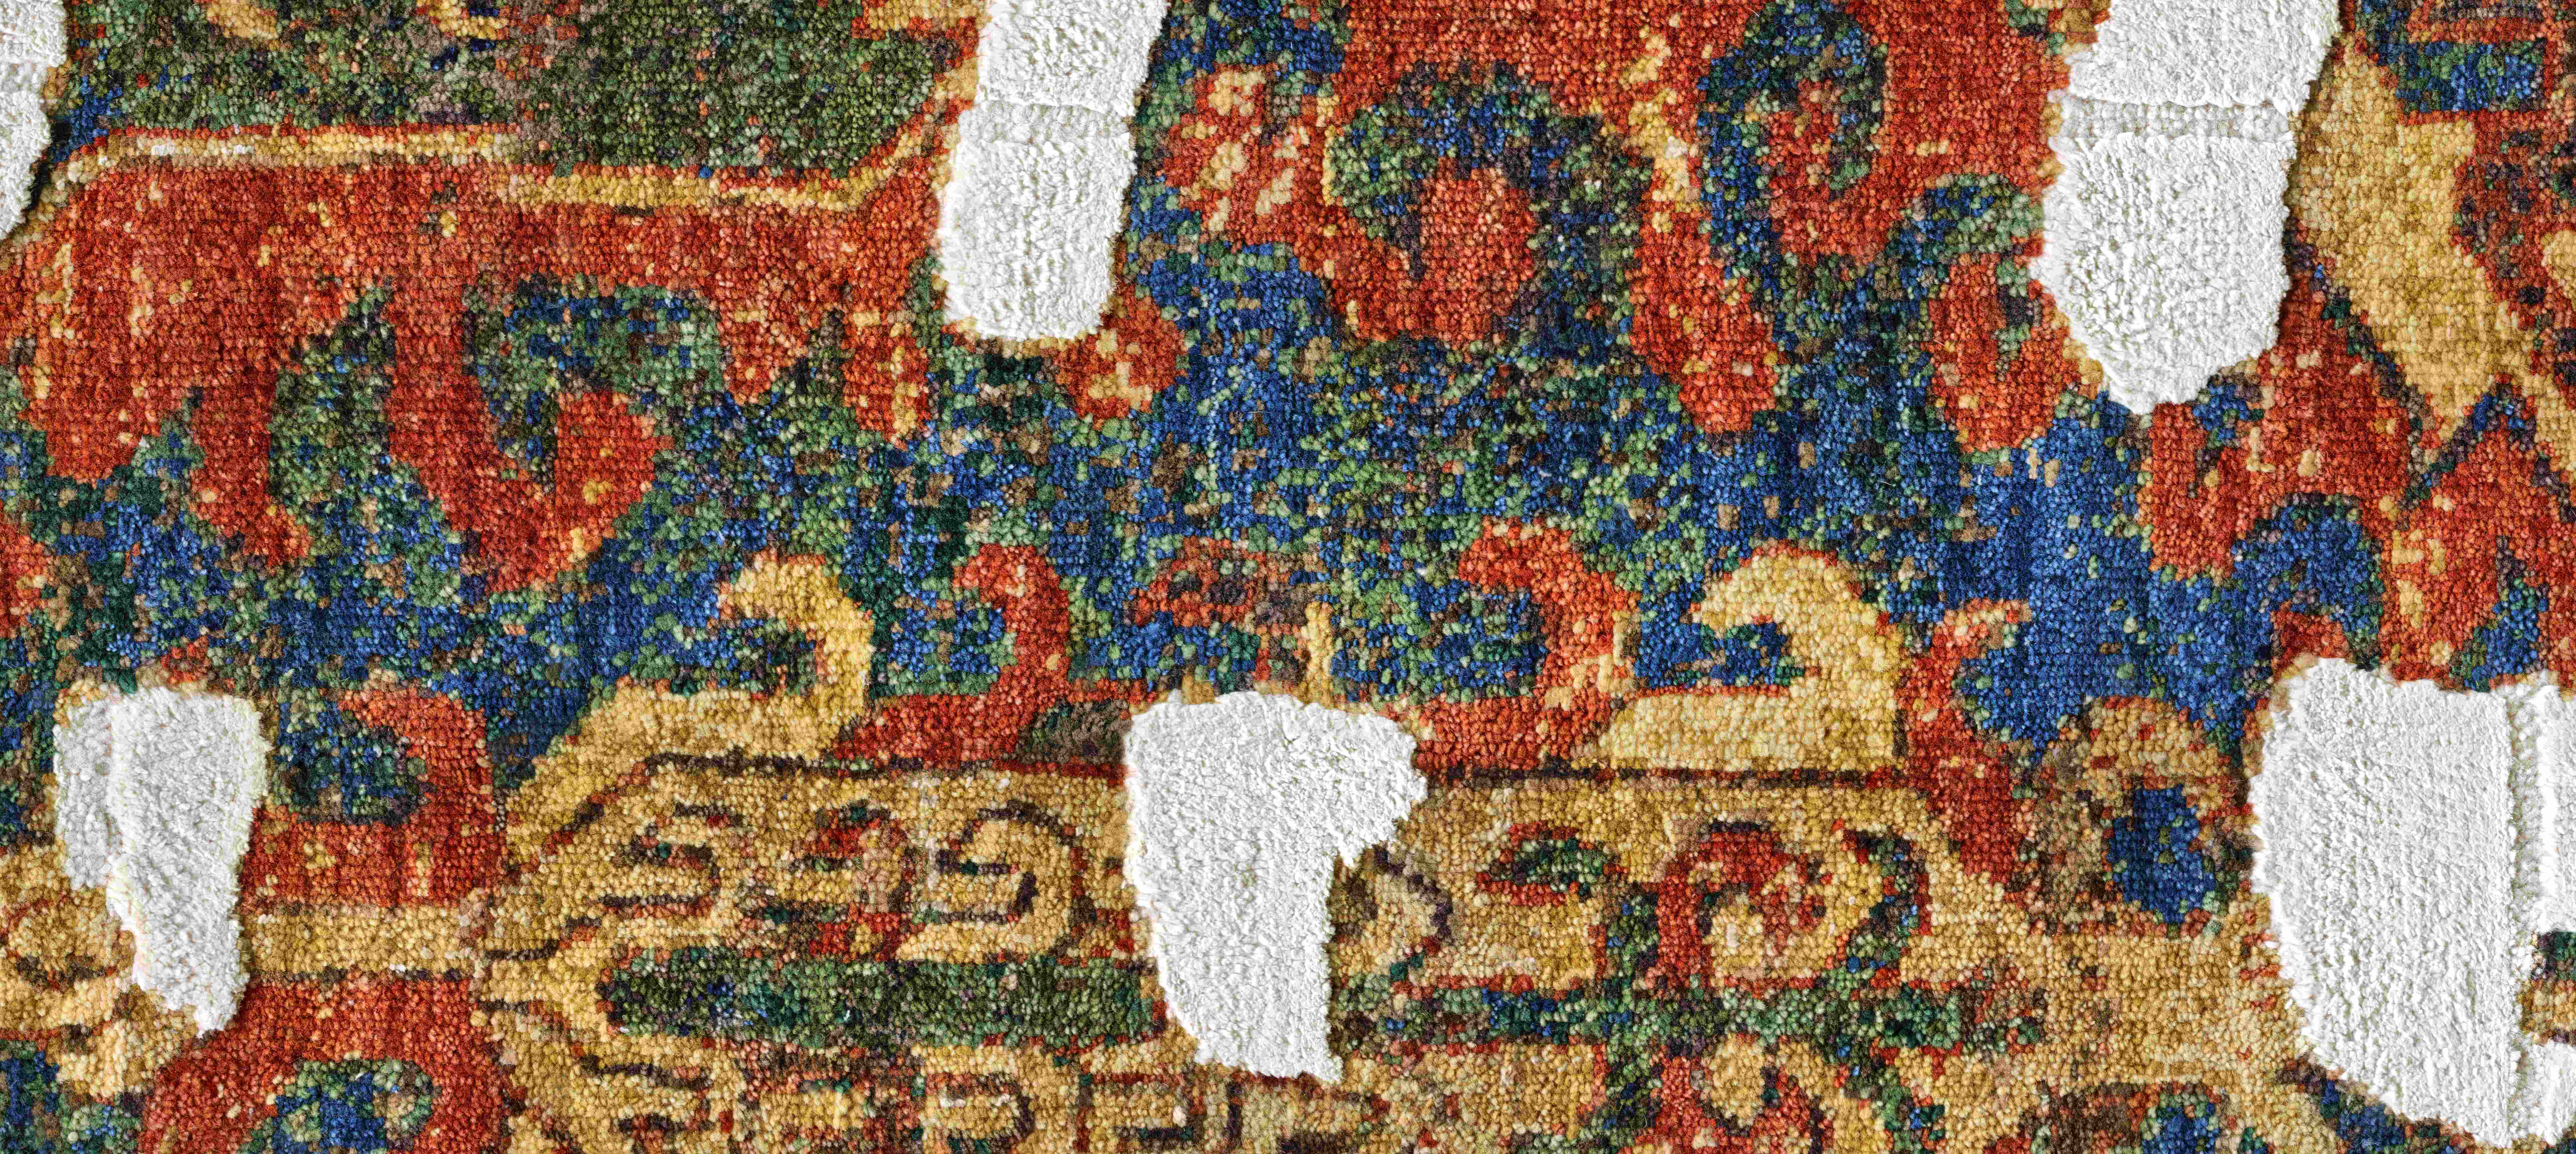 CulturalxCollabs: Fragment No. 16 © Museum für Islamische Kunst, Heiner Büld